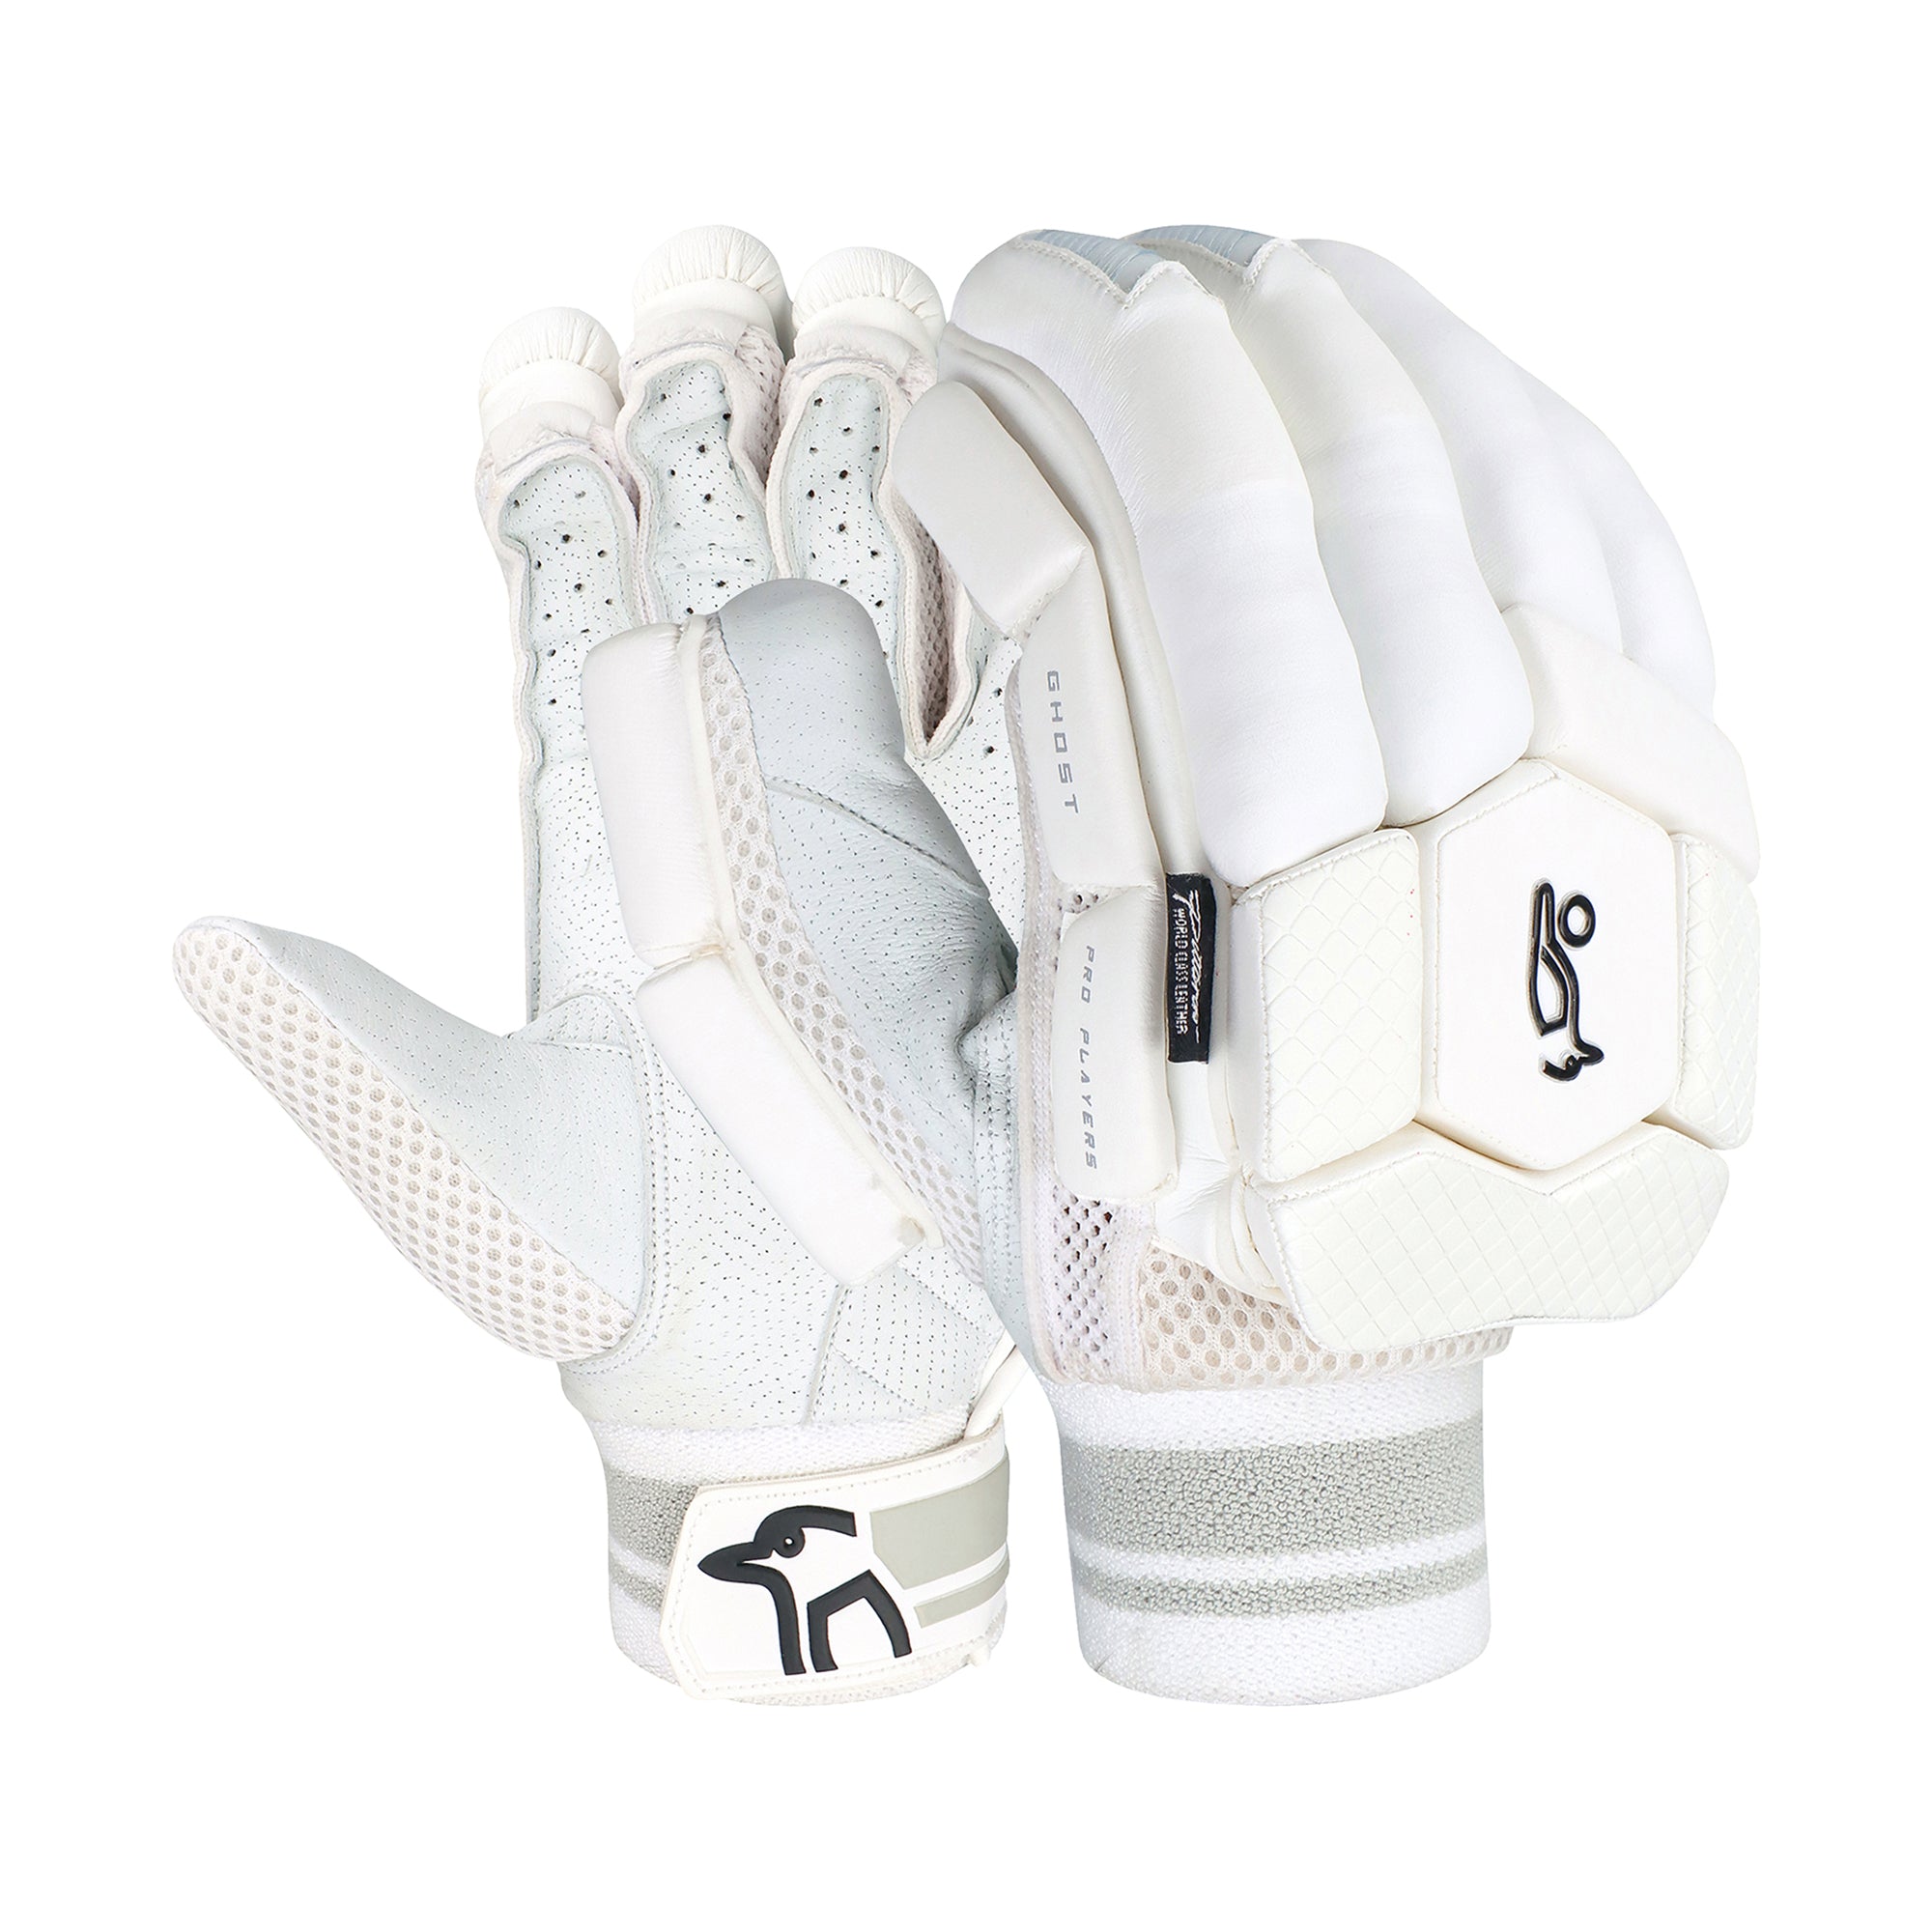 Kookaburra Ghost Pro Players Batting Gloves